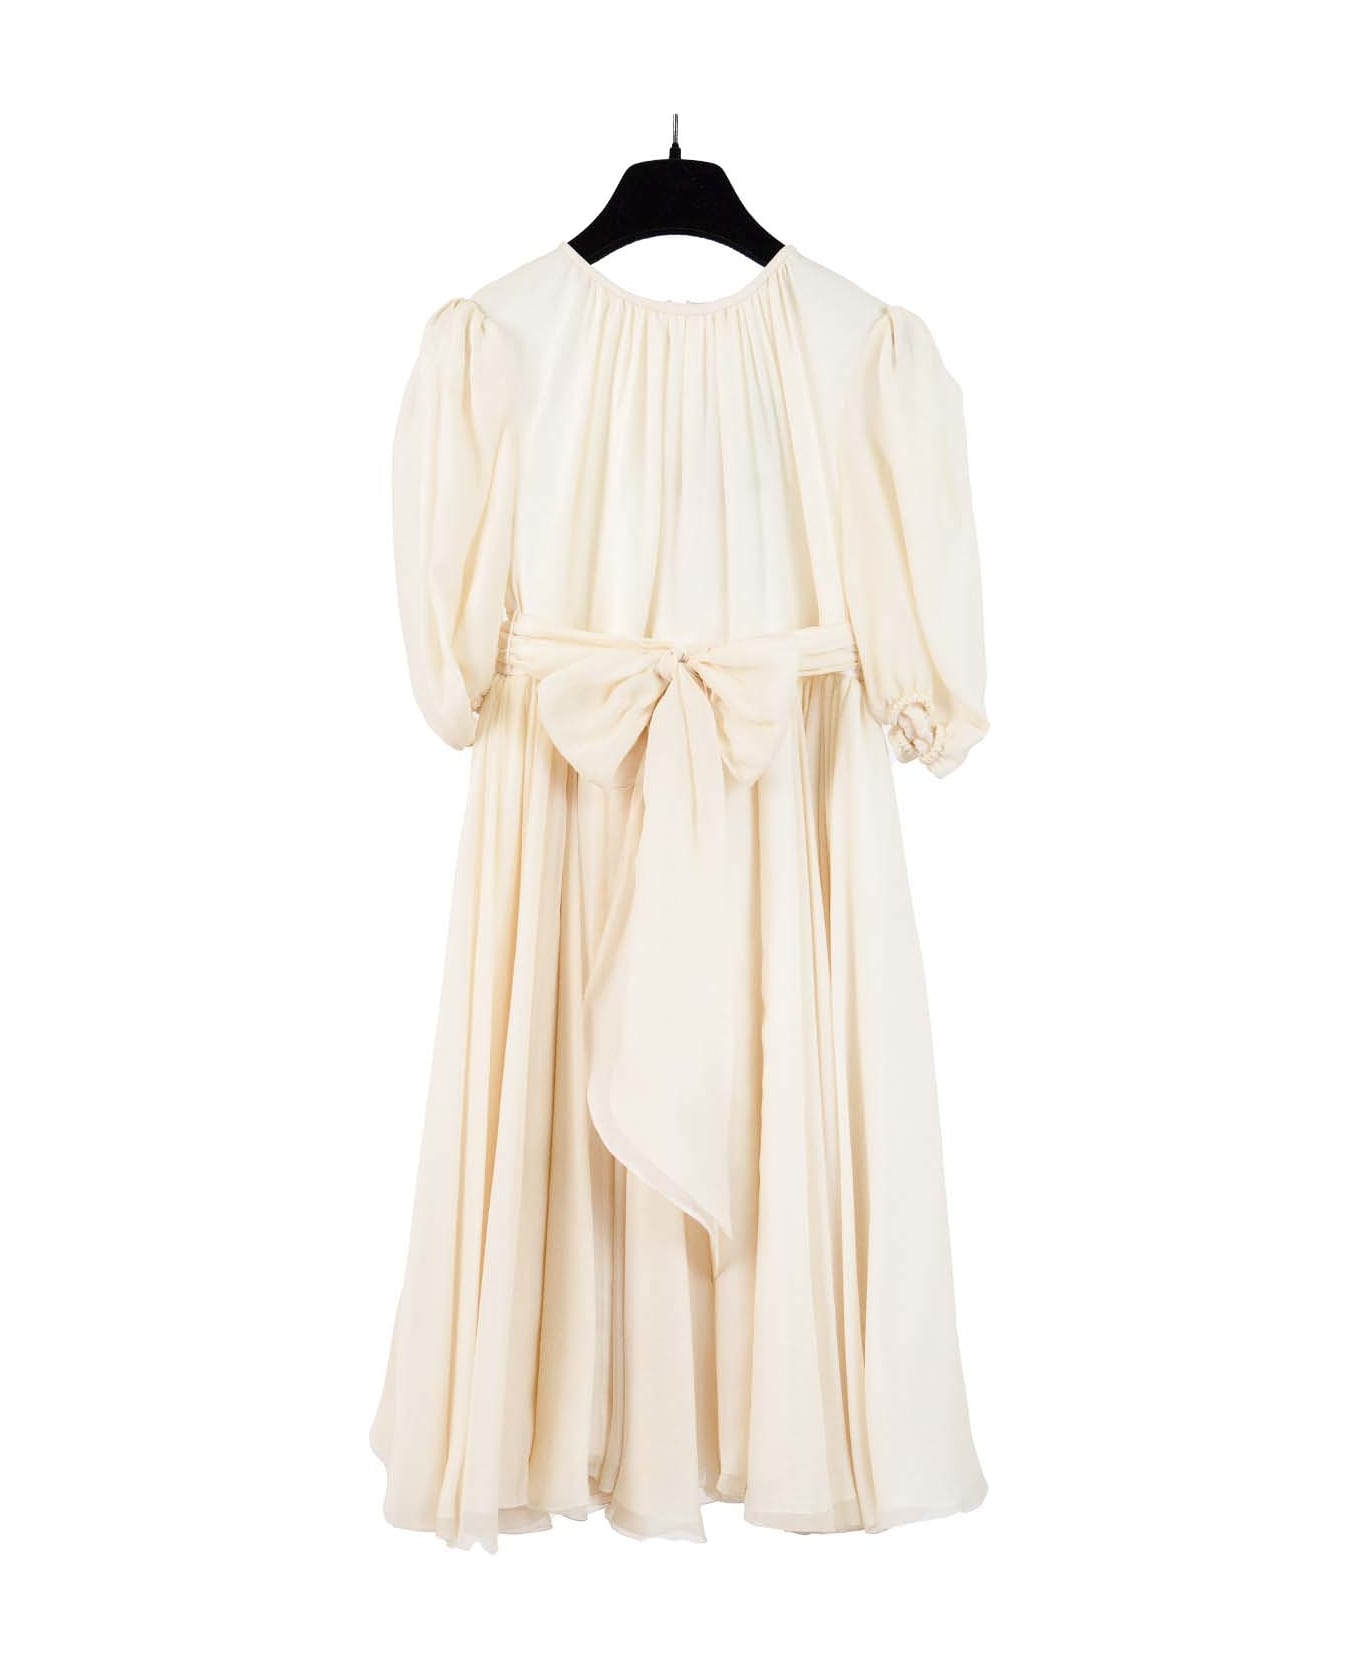 Dolce belt & Gabbana Silk Dress